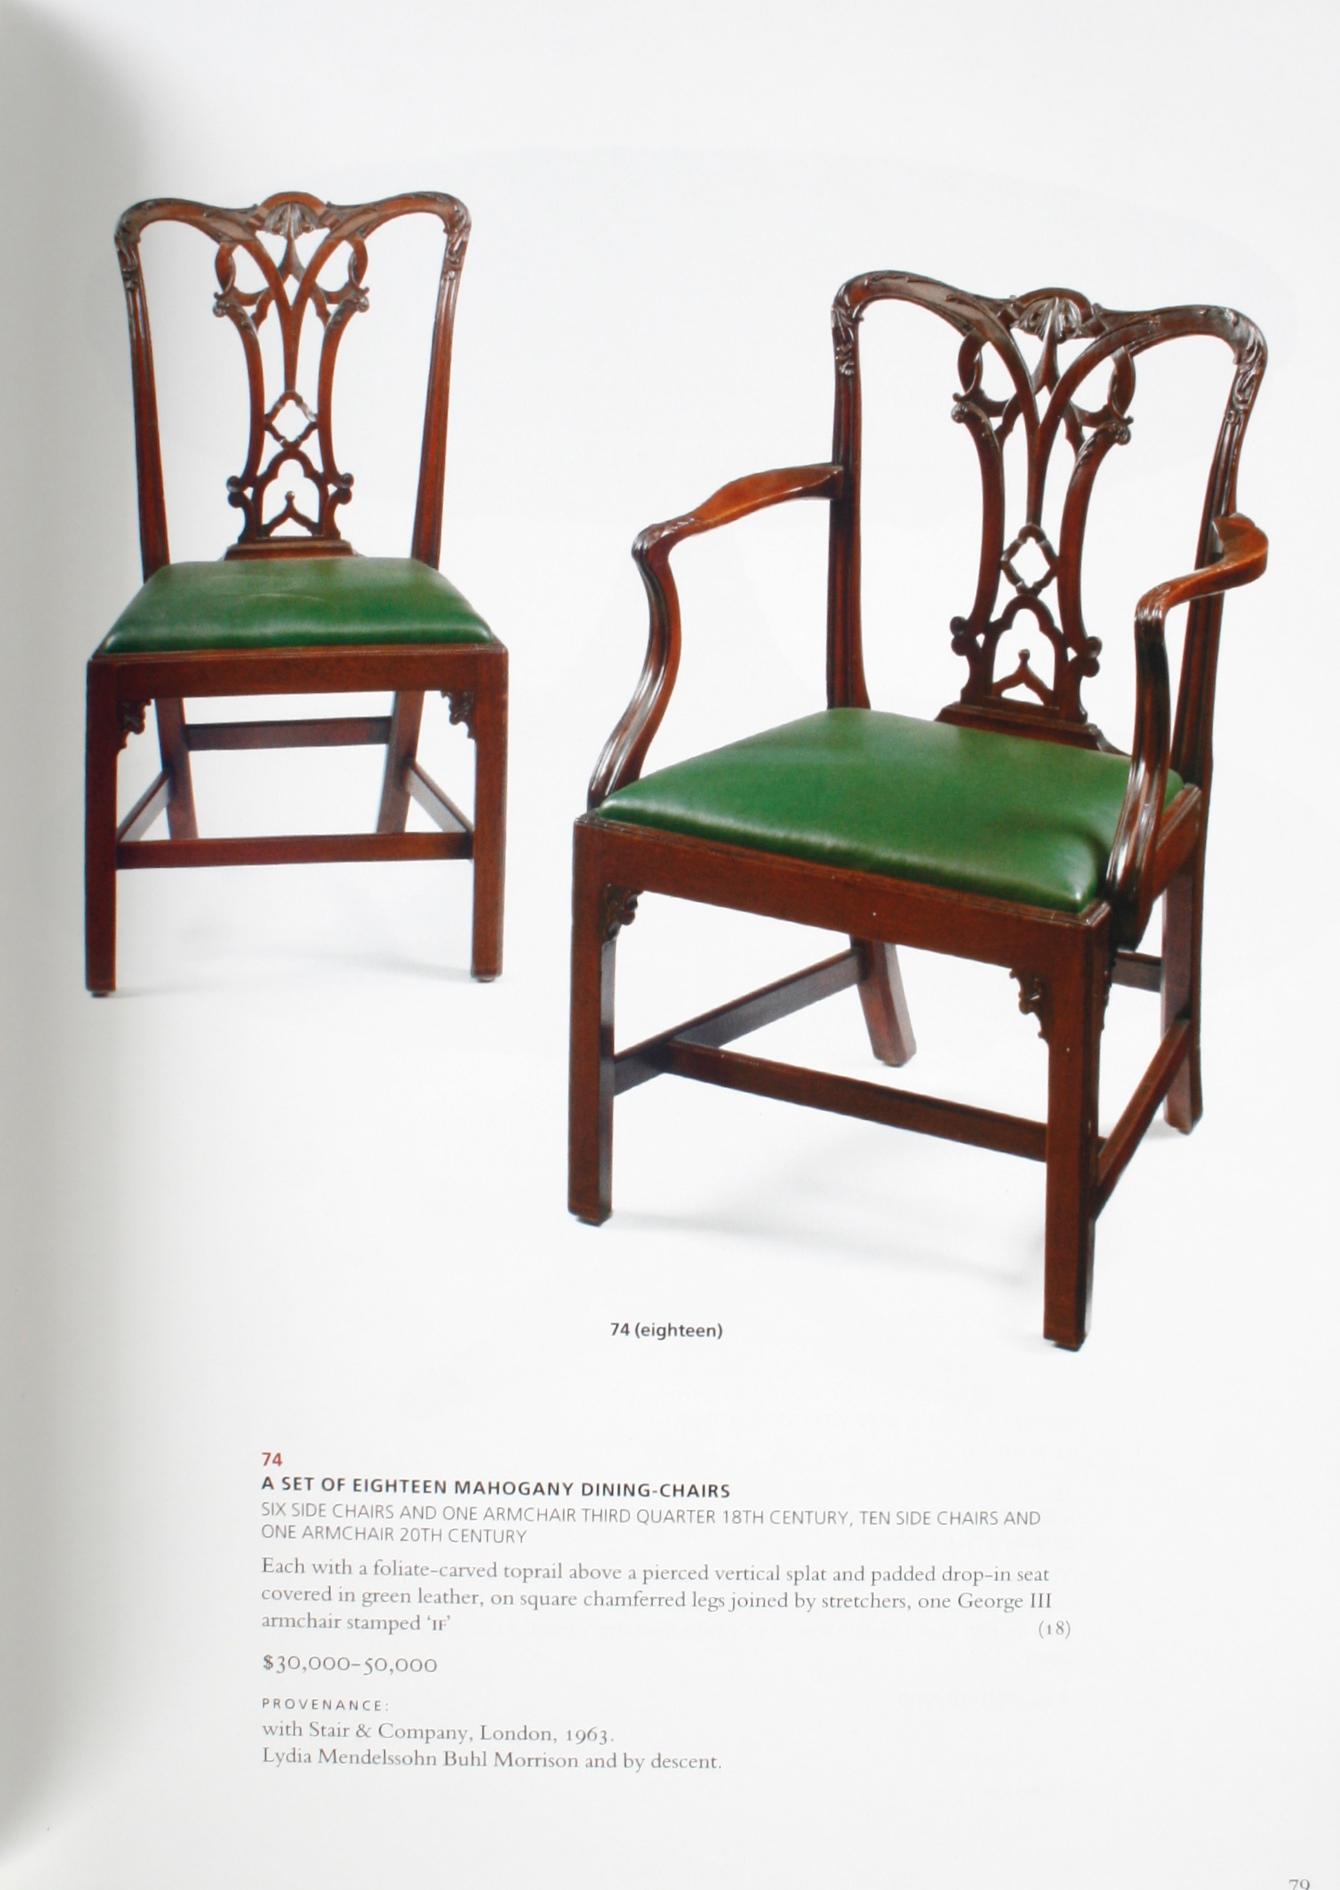 Christies: Important English Furniture: Reed House, David Adler & Frances Elkin 6